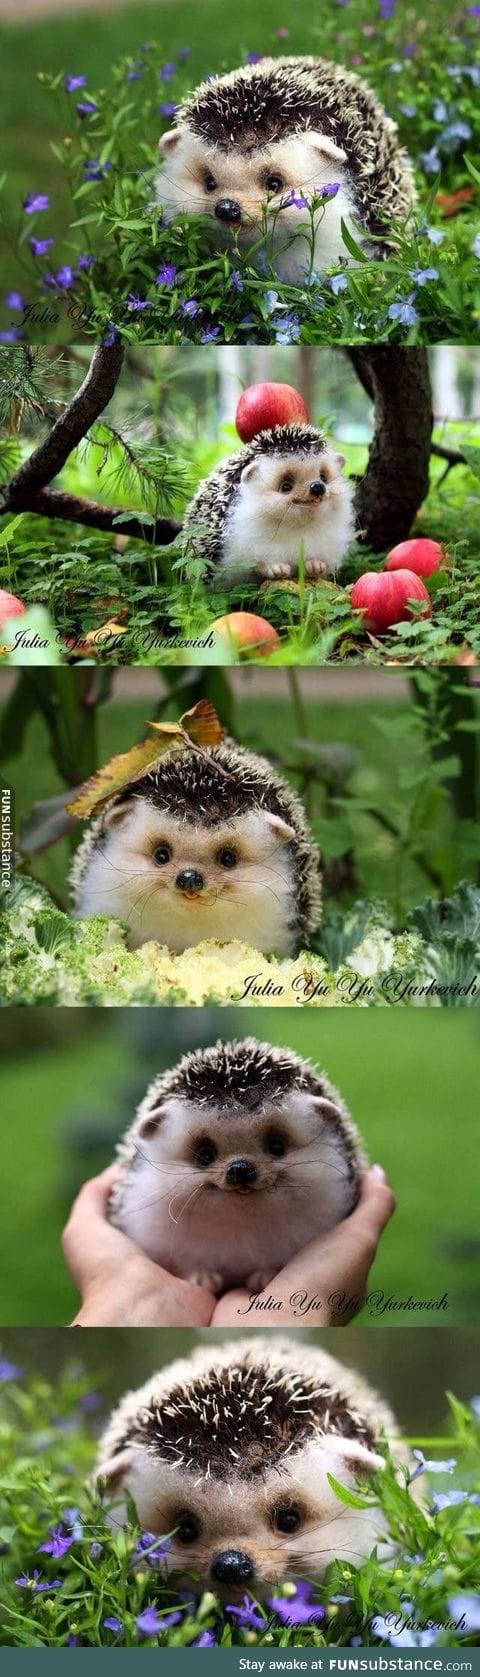 Happy hedgehog